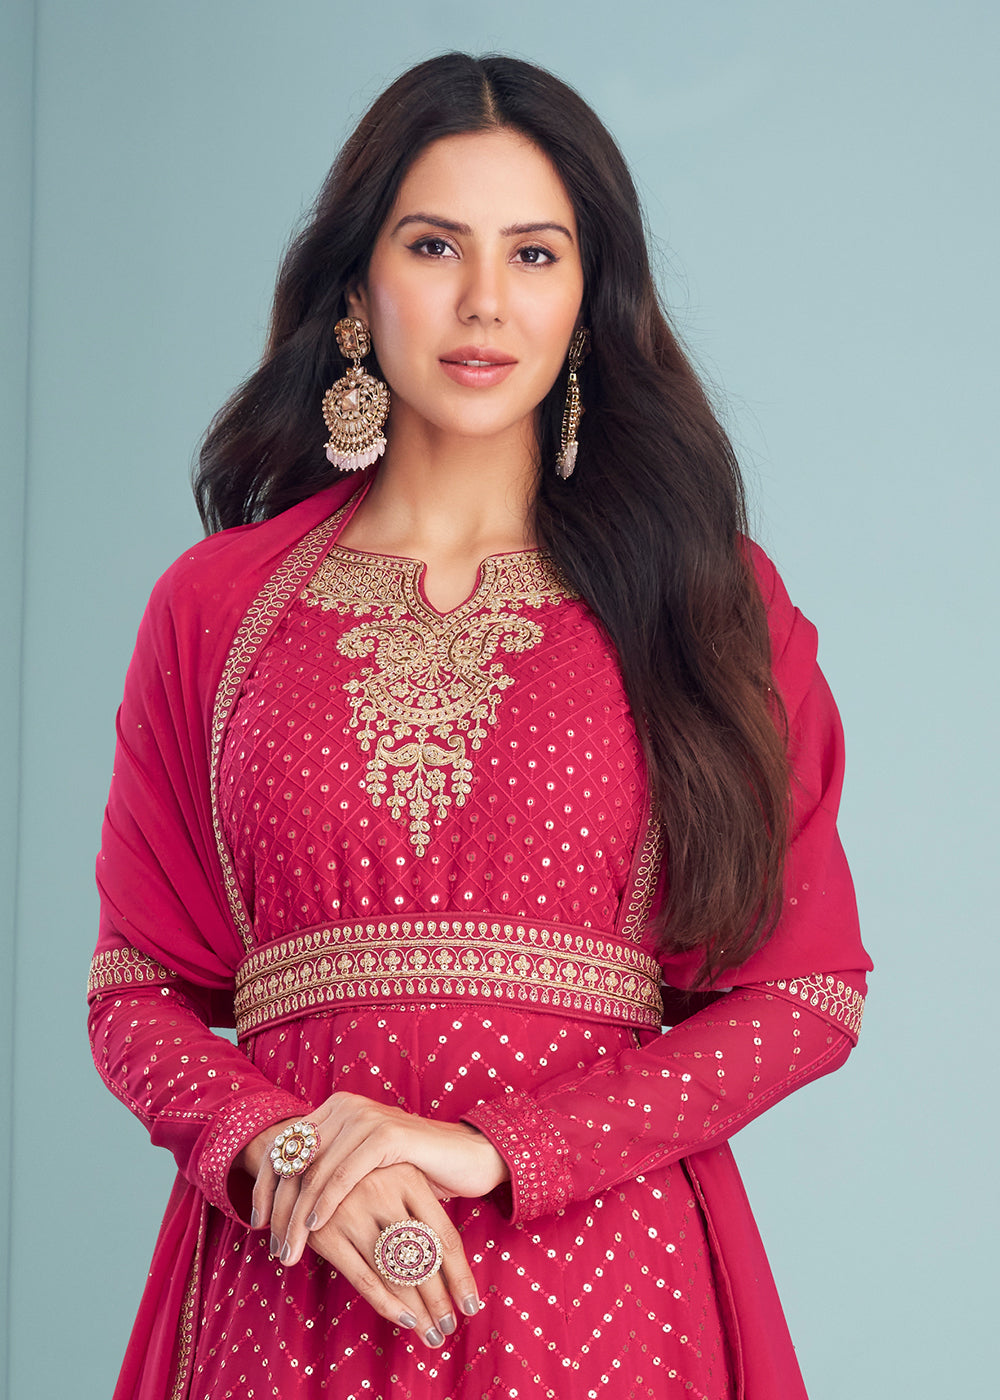 Buy Now Riveting Rani Pink Wedding Wear Designer Anarkali Suit Online in USA, UK, Australia, New Zealand, Canada & Worldwide at Empress Clothing.